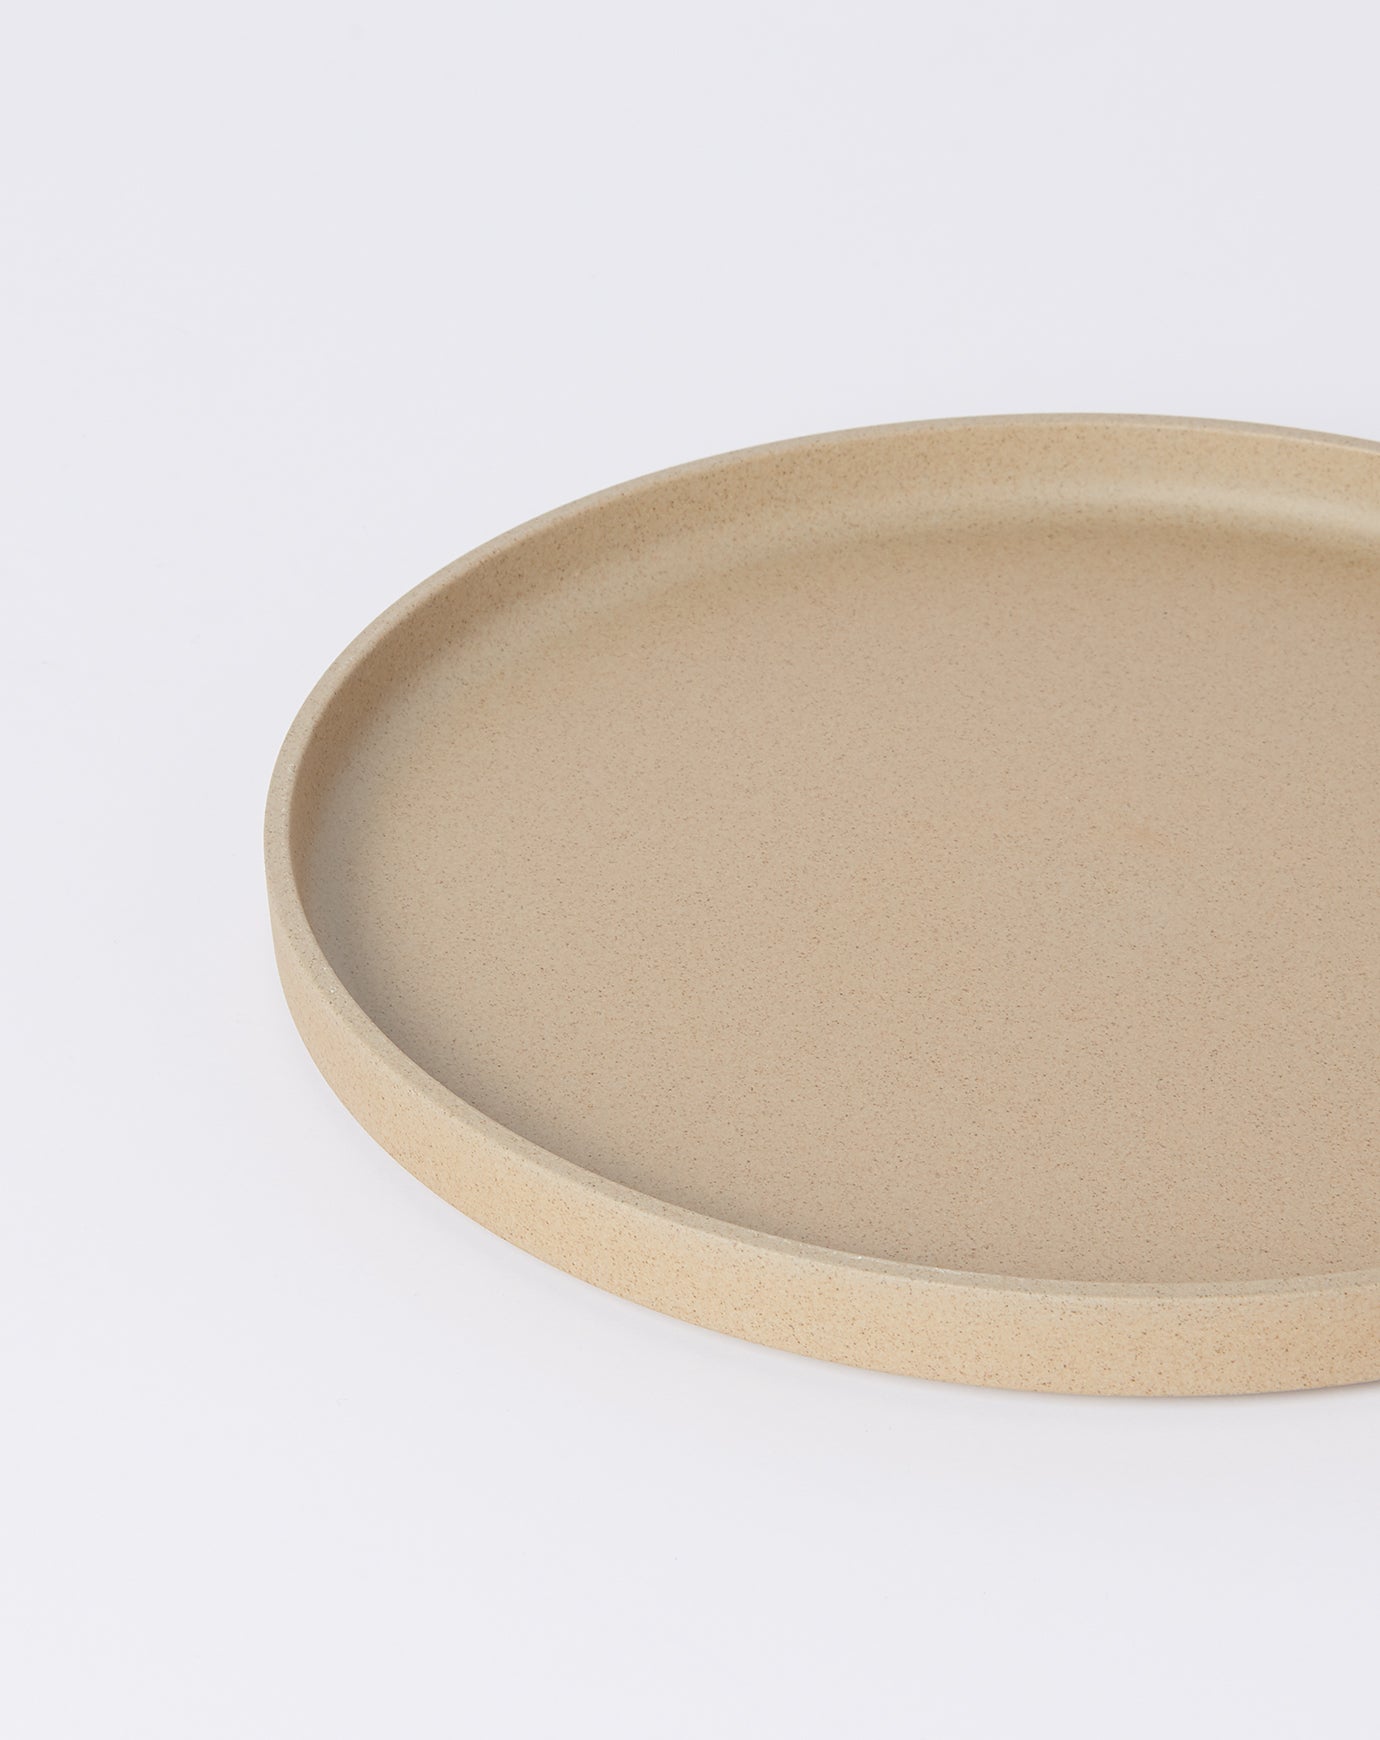 Hasami Porcelain Large Plate in Natural